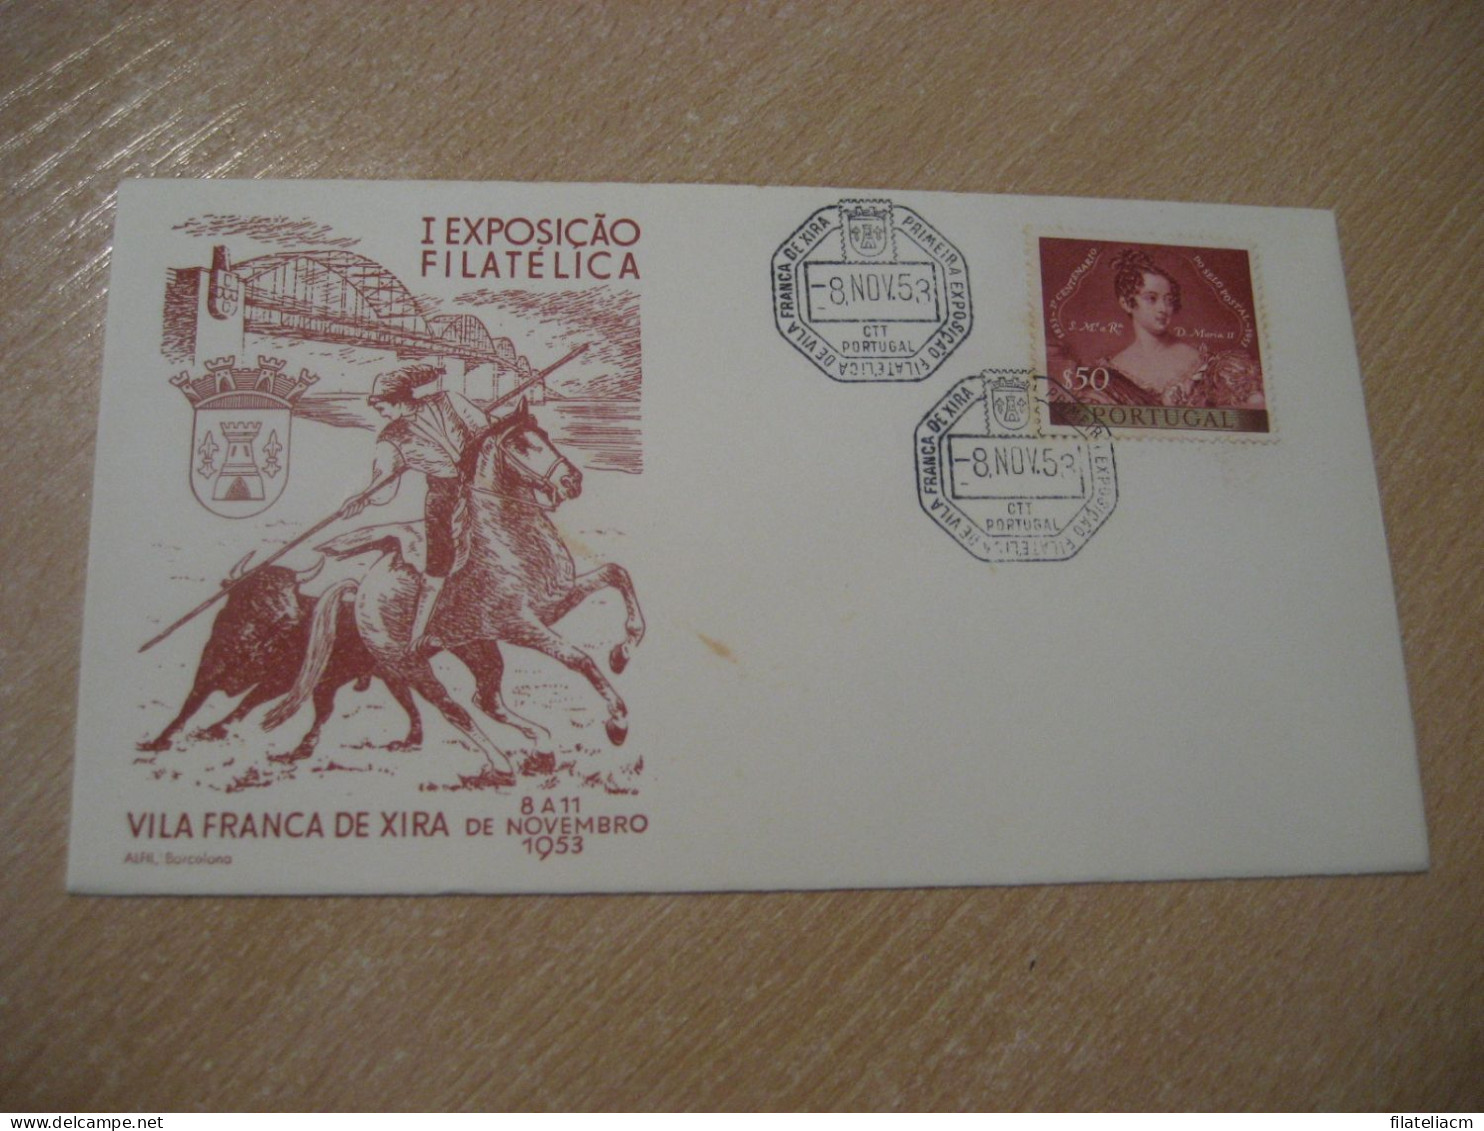 VILA FRANCA DE XIRA 1953 Expo Filatelica Toro Rejoneador Cow Bull Horse Matador Cancel Cover PORTUGAL - Cartas & Documentos